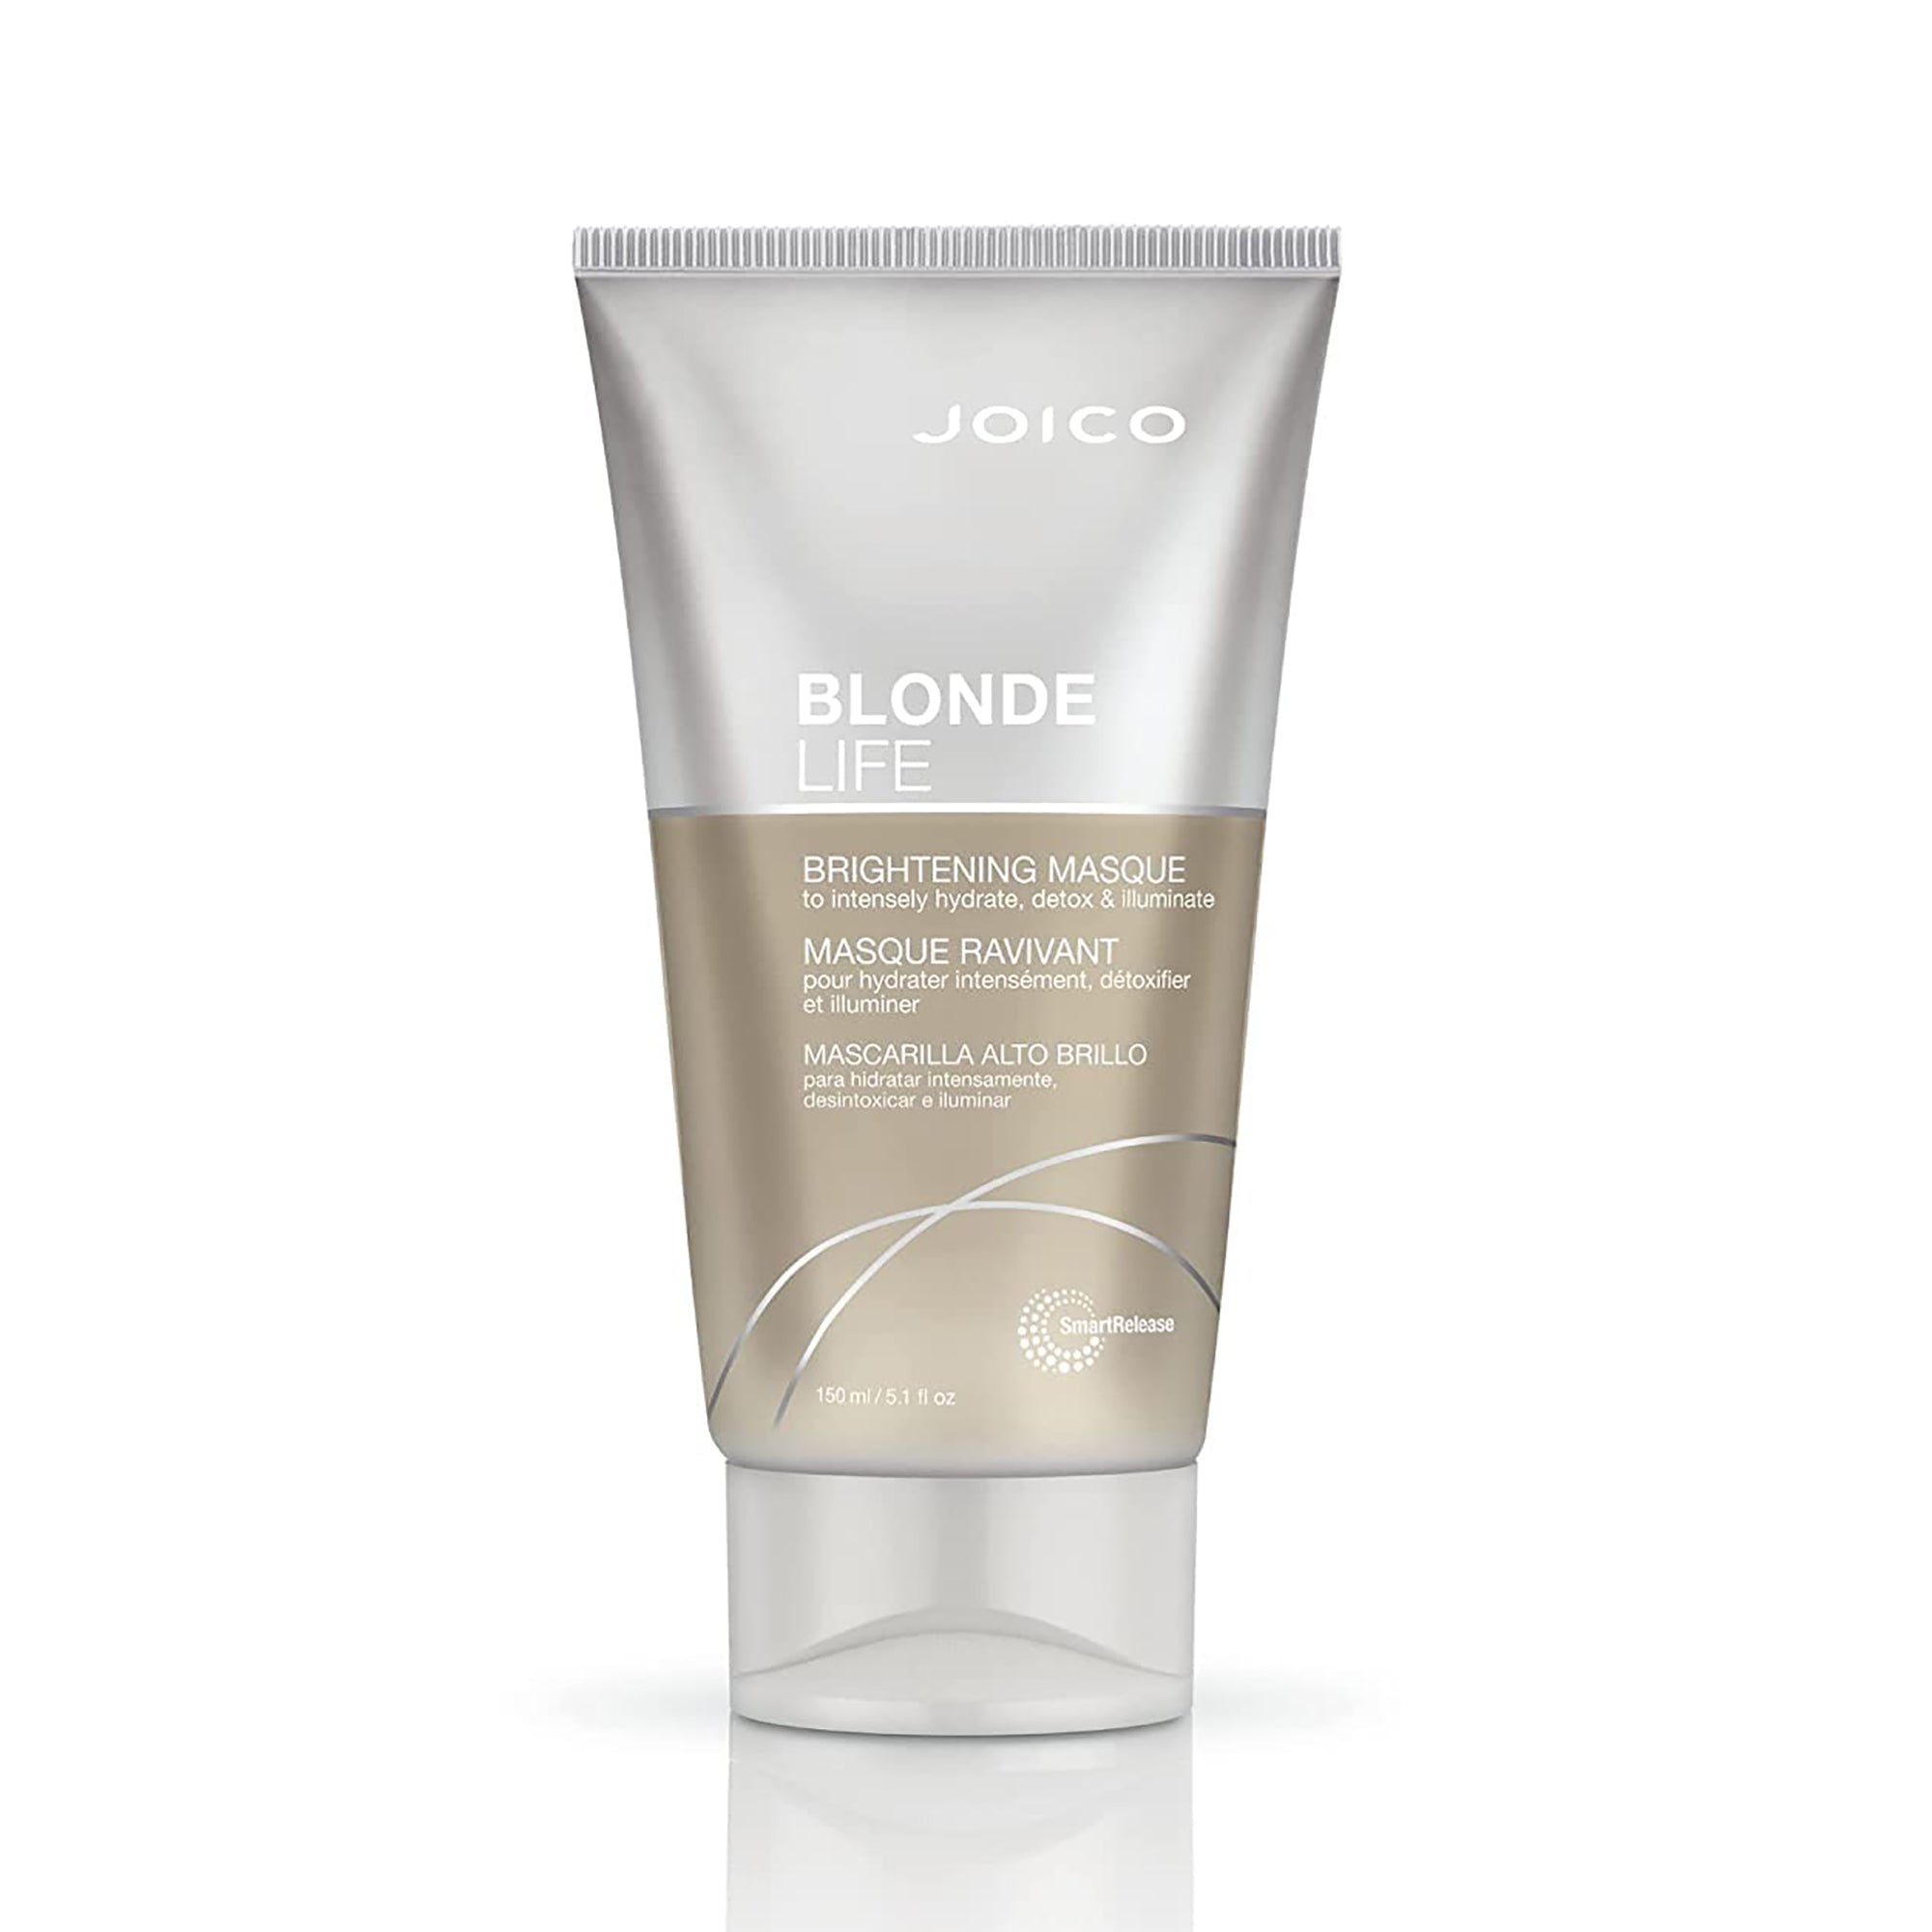 Joico Blonde Life Brightening Masque / 5.1OZ